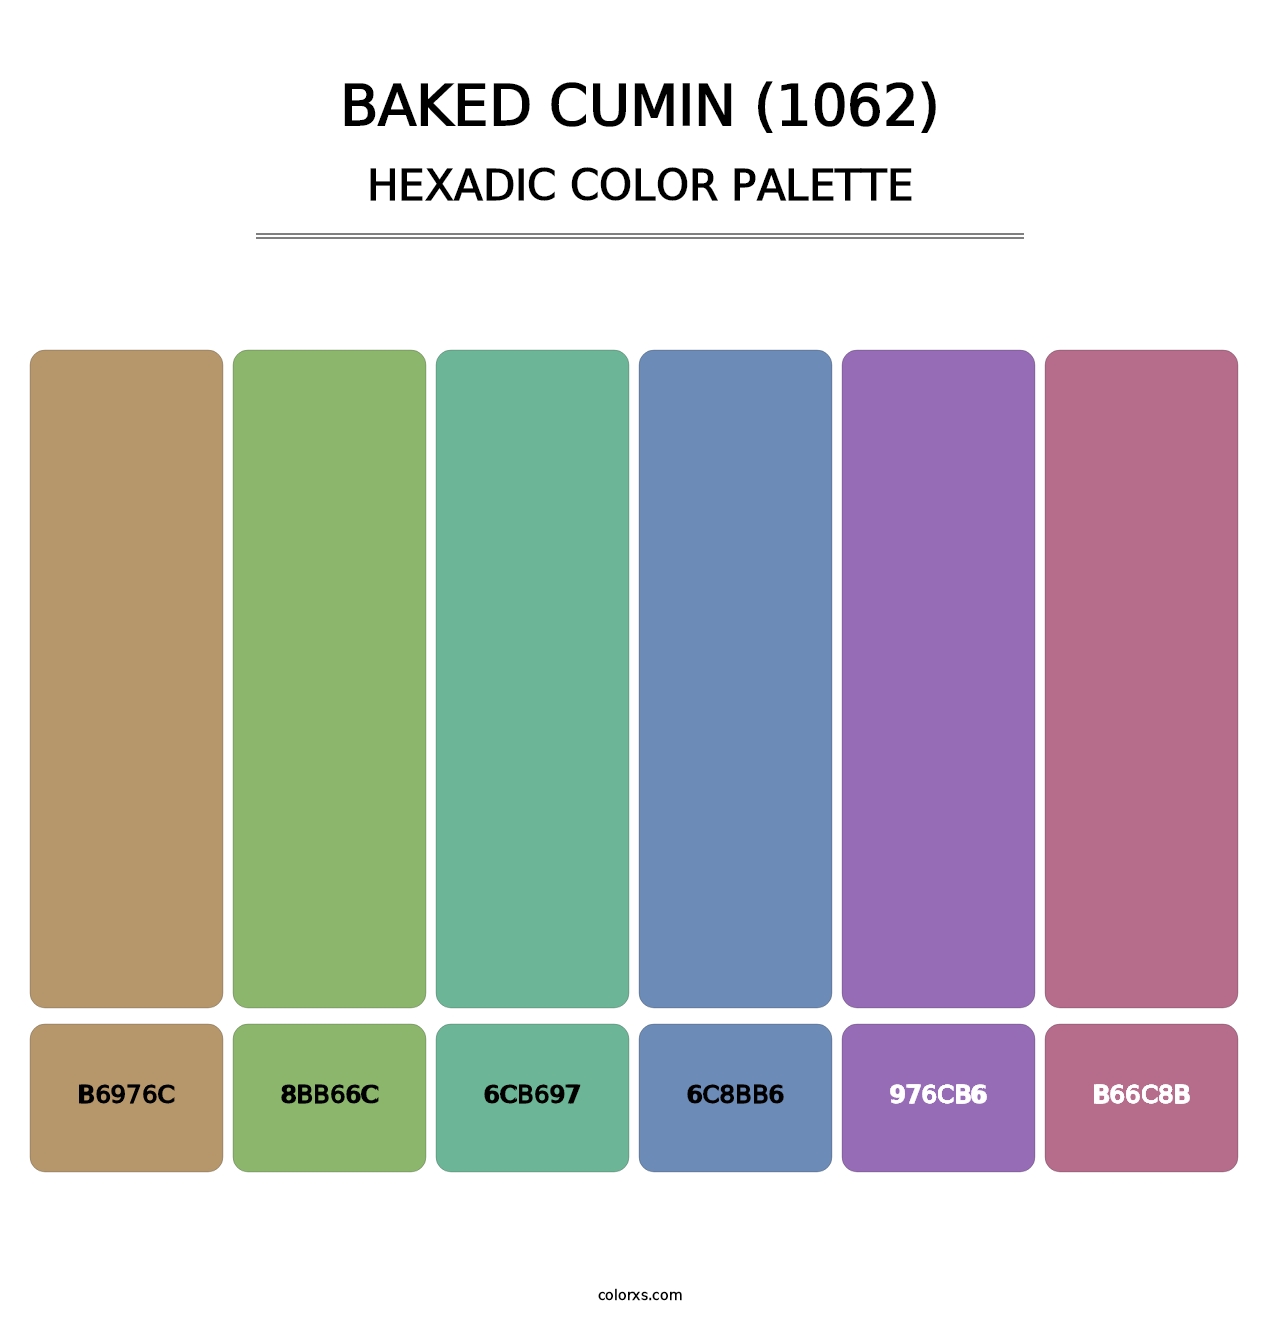 Baked Cumin (1062) - Hexadic Color Palette